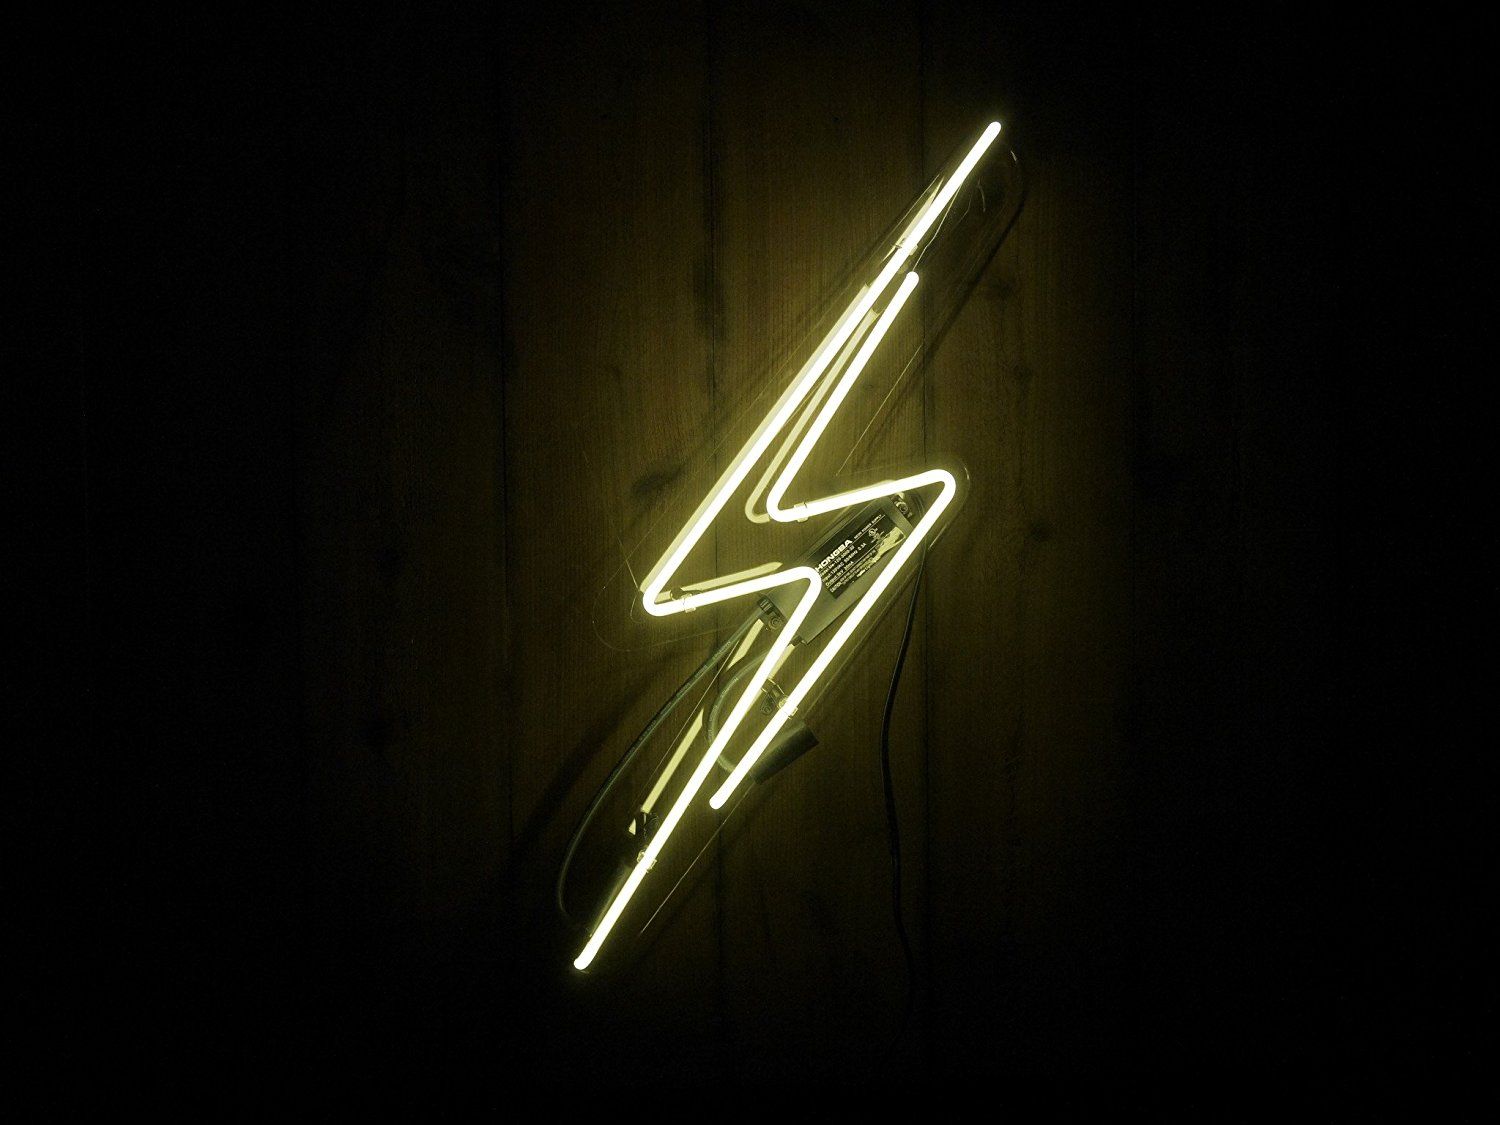 New 20 X16 Lightning Bolt Acrylic Panel Neon Sign Man Cave Signs Sports Bar Pub Beer Neon Lights Lamp Glass Neon Light